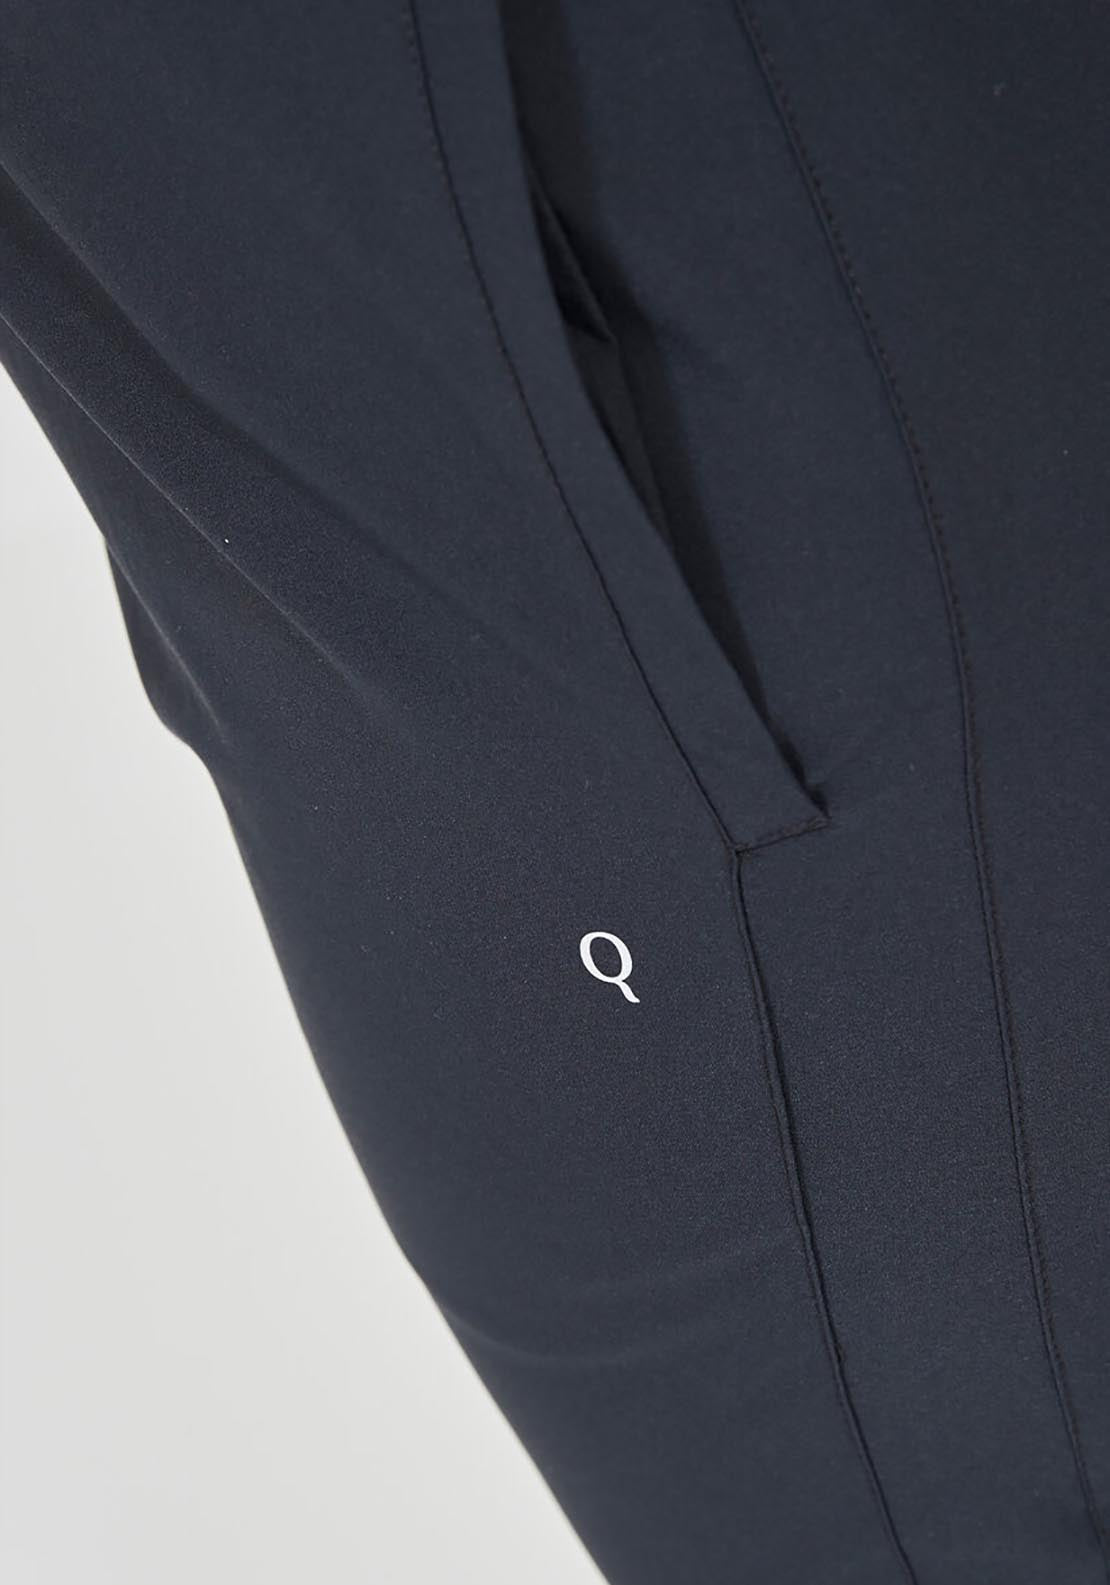 Q Carpo Womens Pants - Black 7 Shaws Department Stores